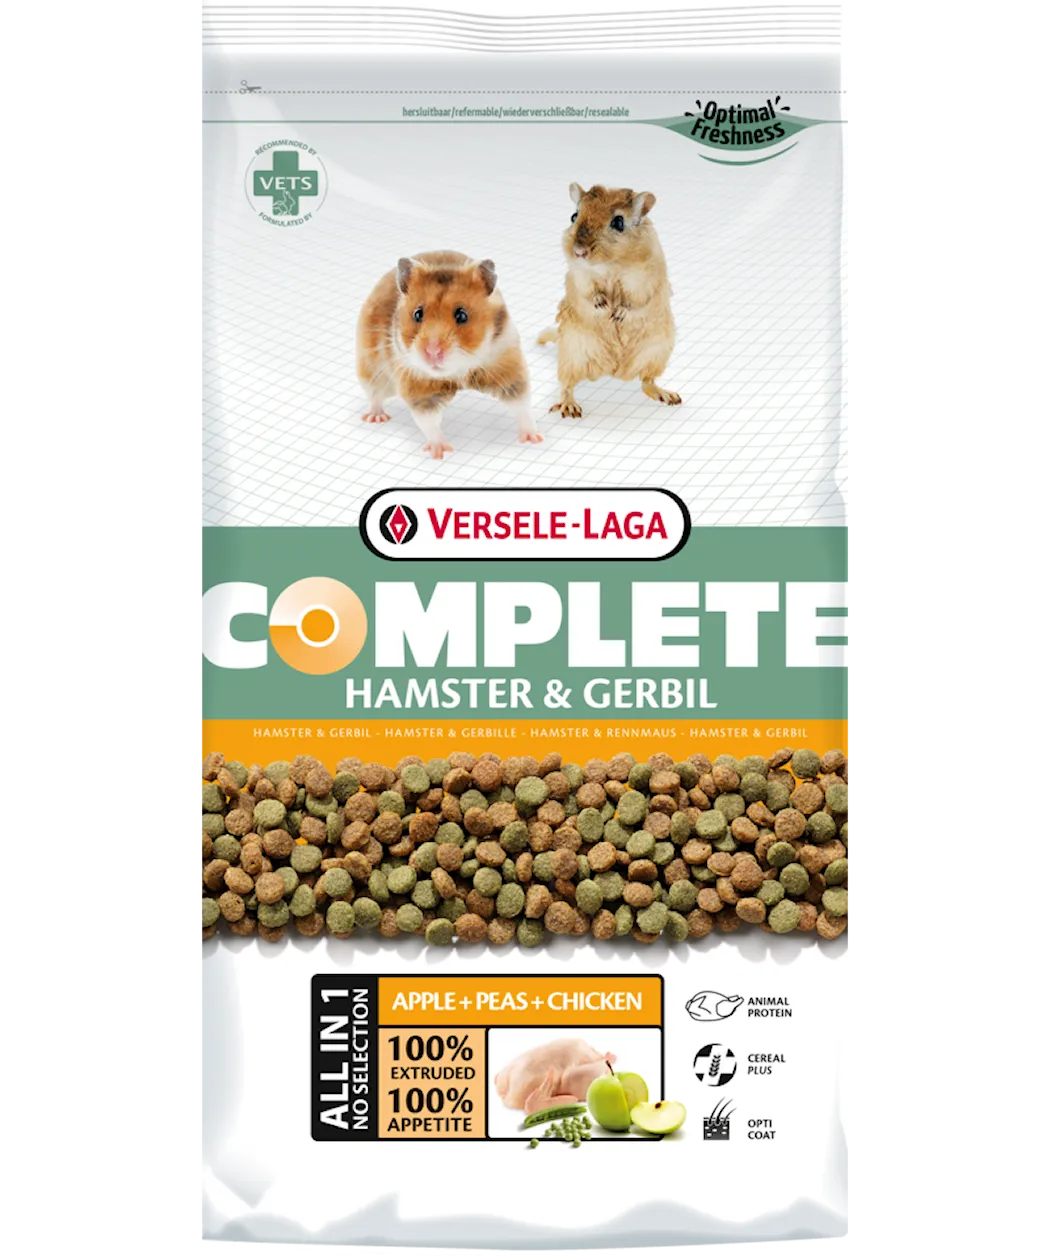 versele-laga_complete_hamster_gerbil_-_protein-ric